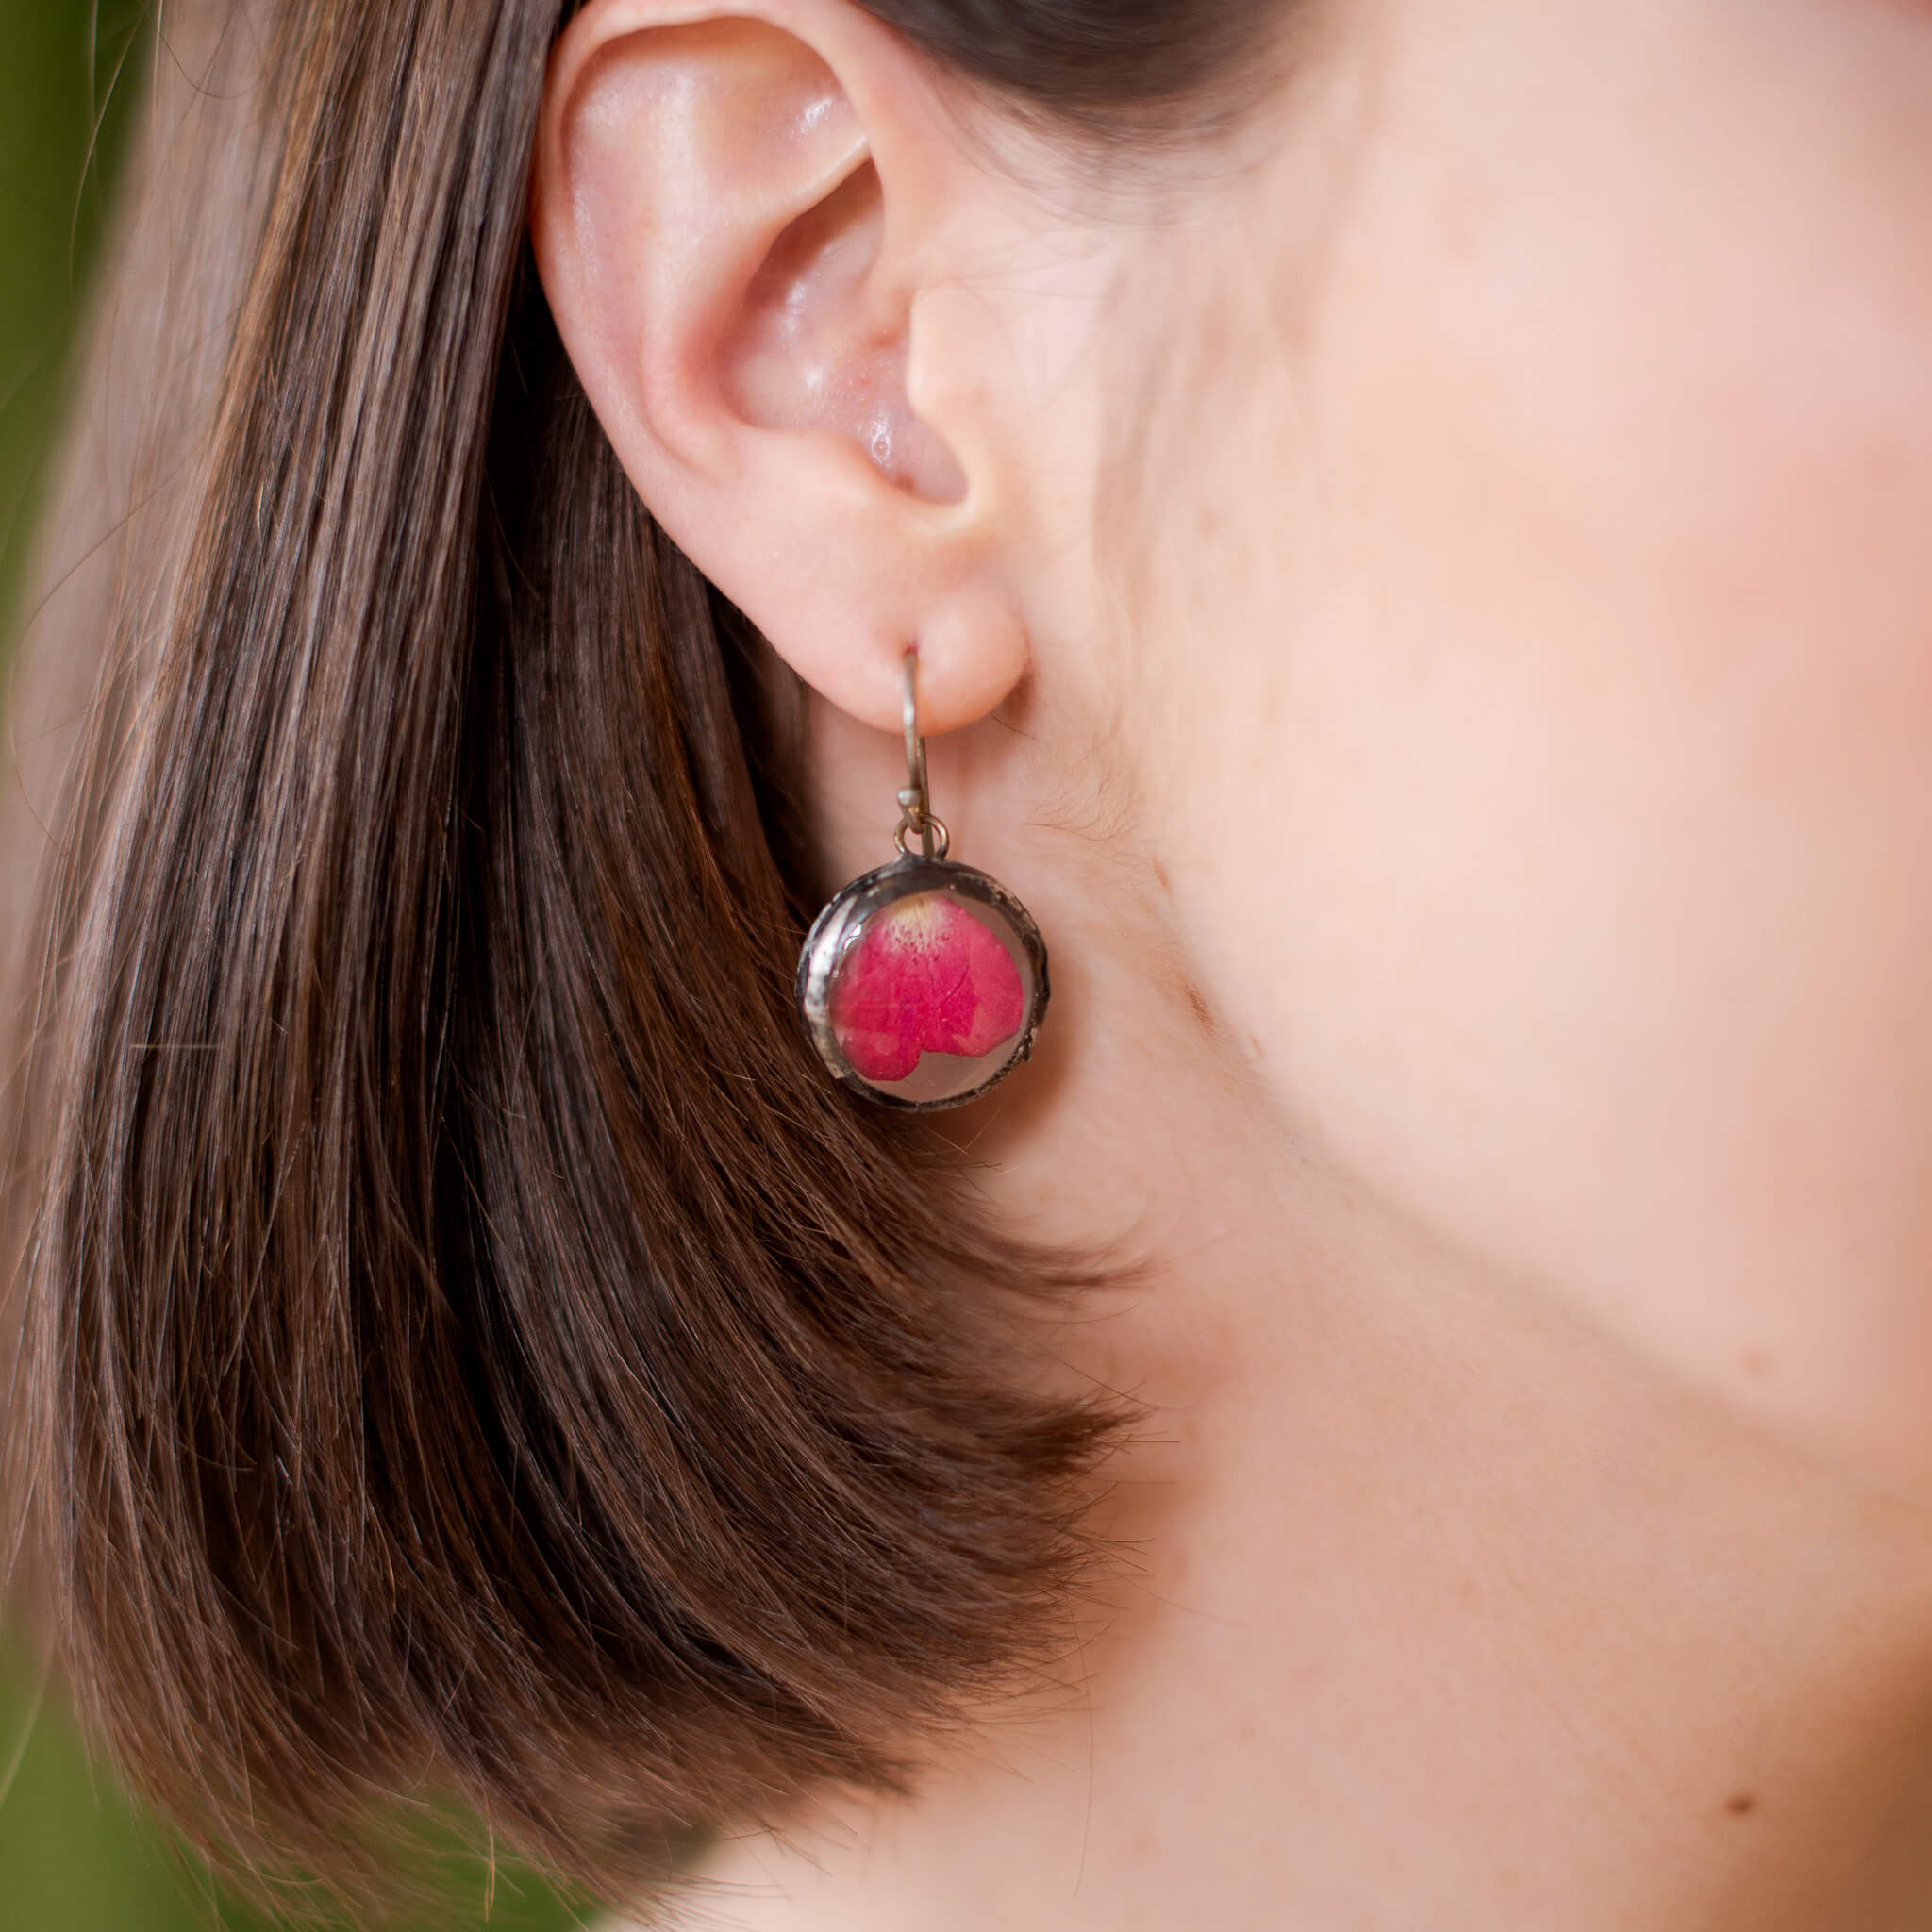 Brunette head zoom showing hair, ear and rose petal earrings